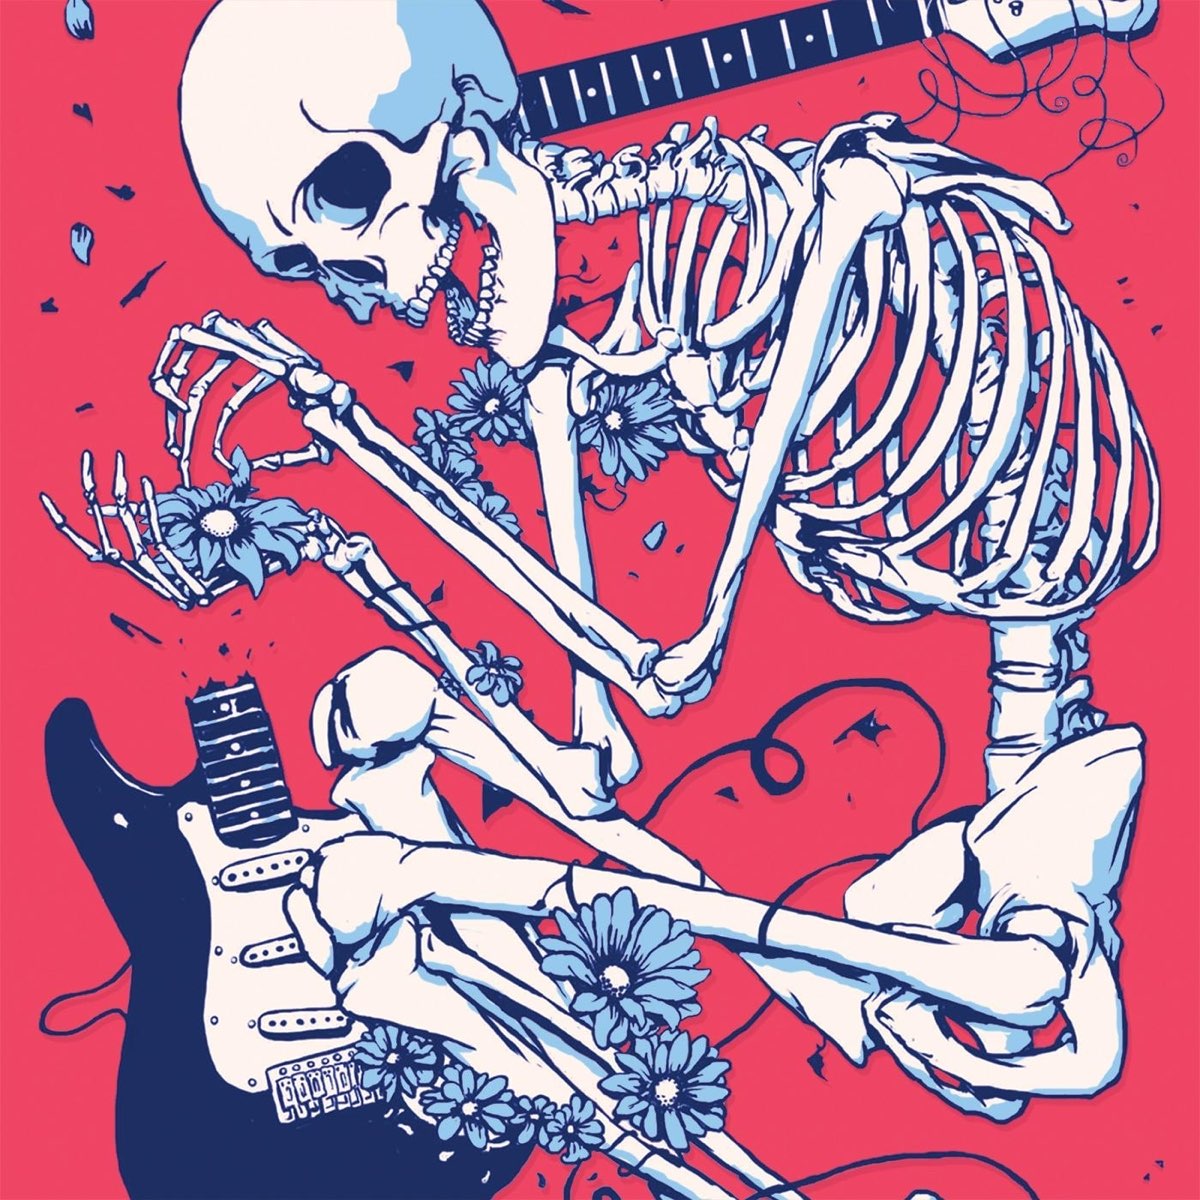 Loose bones. Bones обложки альбомов. Bones (музыкант). Bones музыкант альбомы. Bones музыкант обложка.